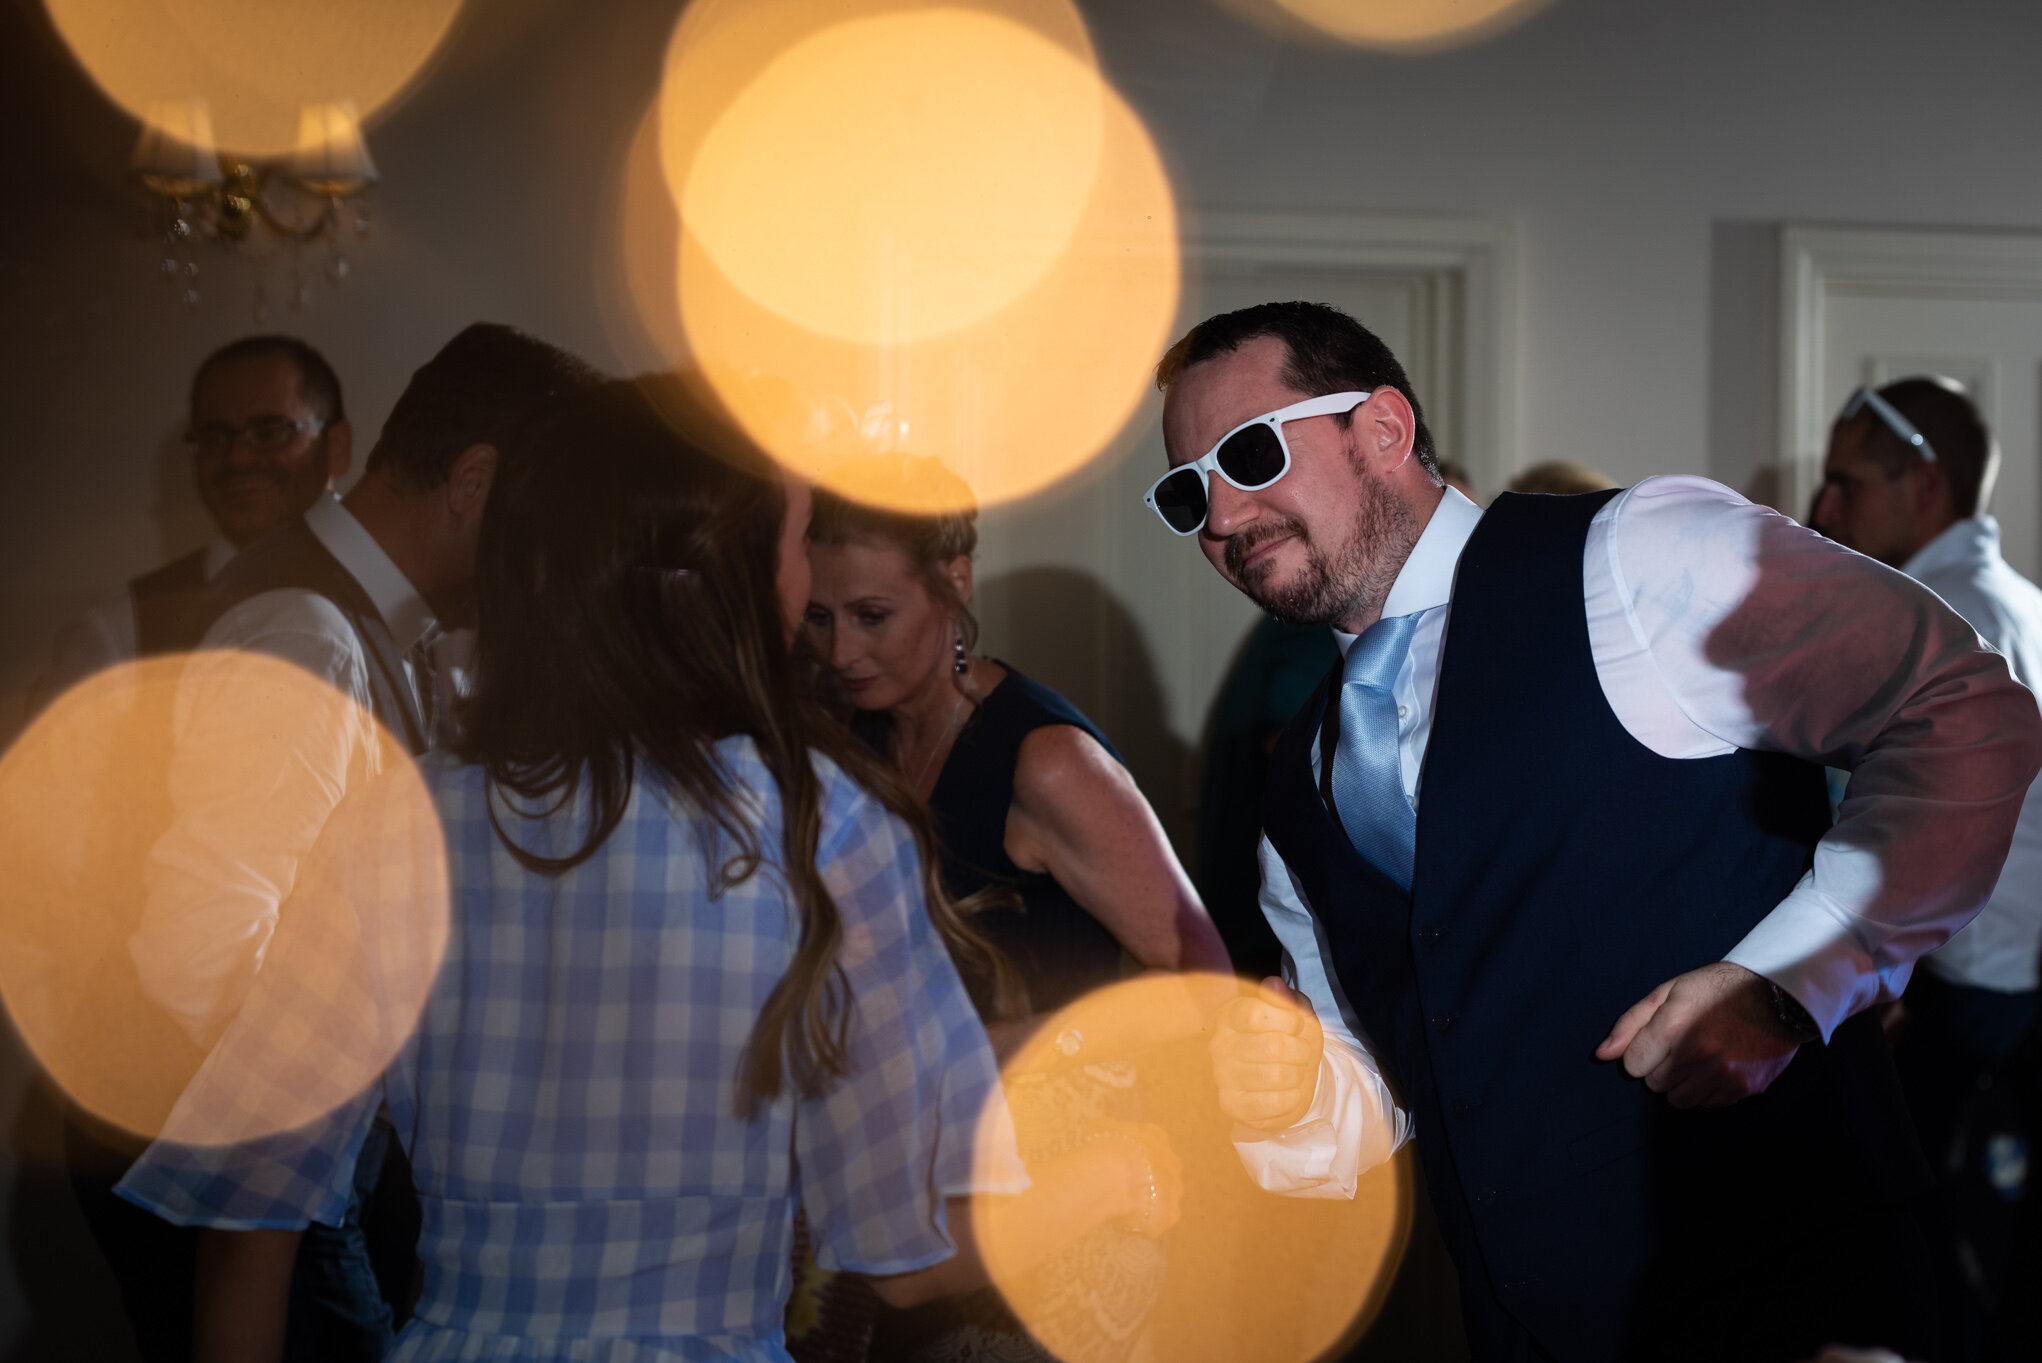 Best man dancing at wedding